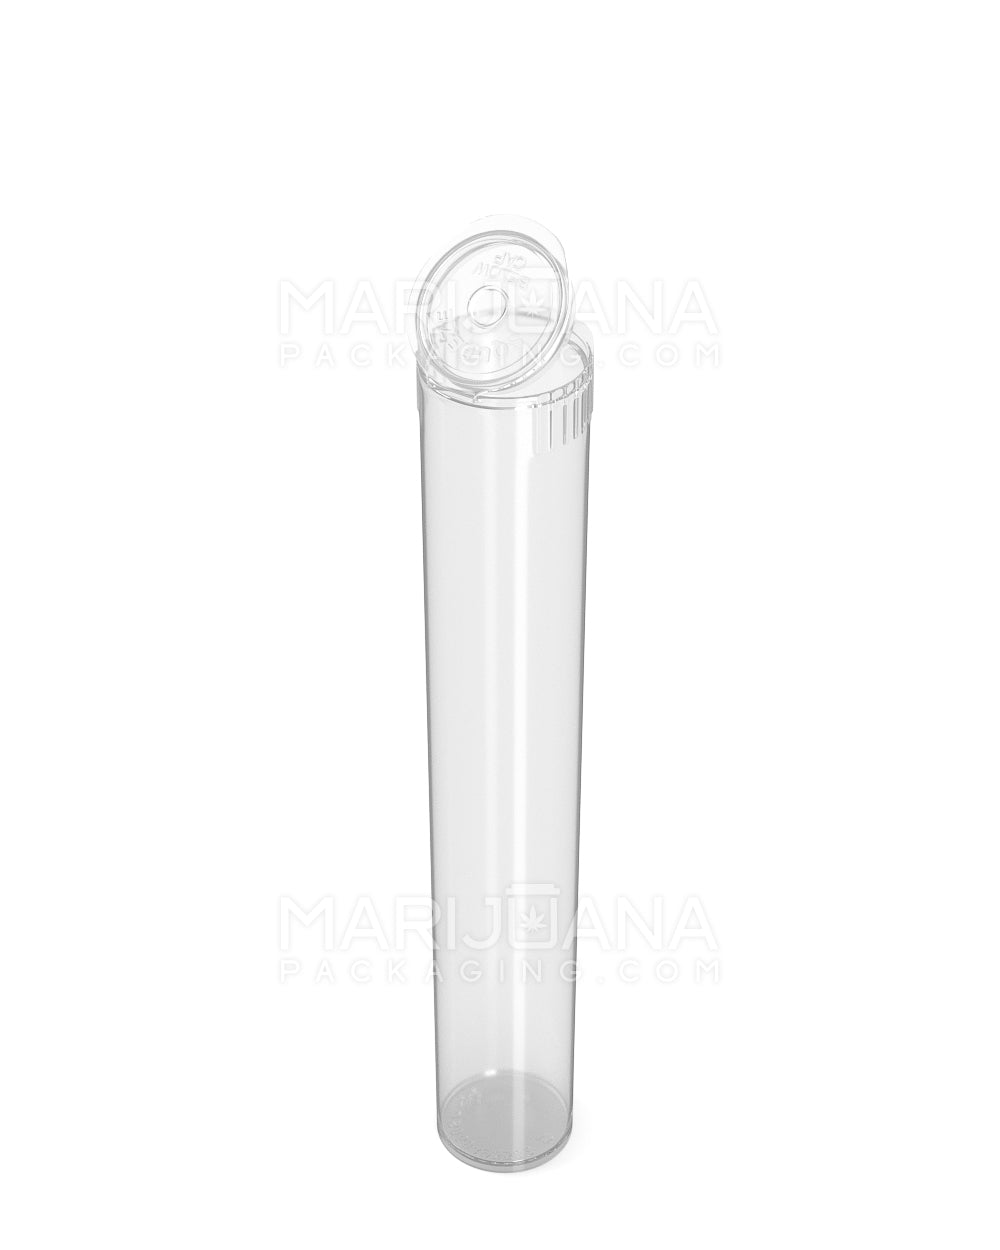 POLLEN GEAR | Child Resistant Pop Top Plastic Snap Cap Pre-Roll Tubes | 116mm - Clear - 1008 Count - 4